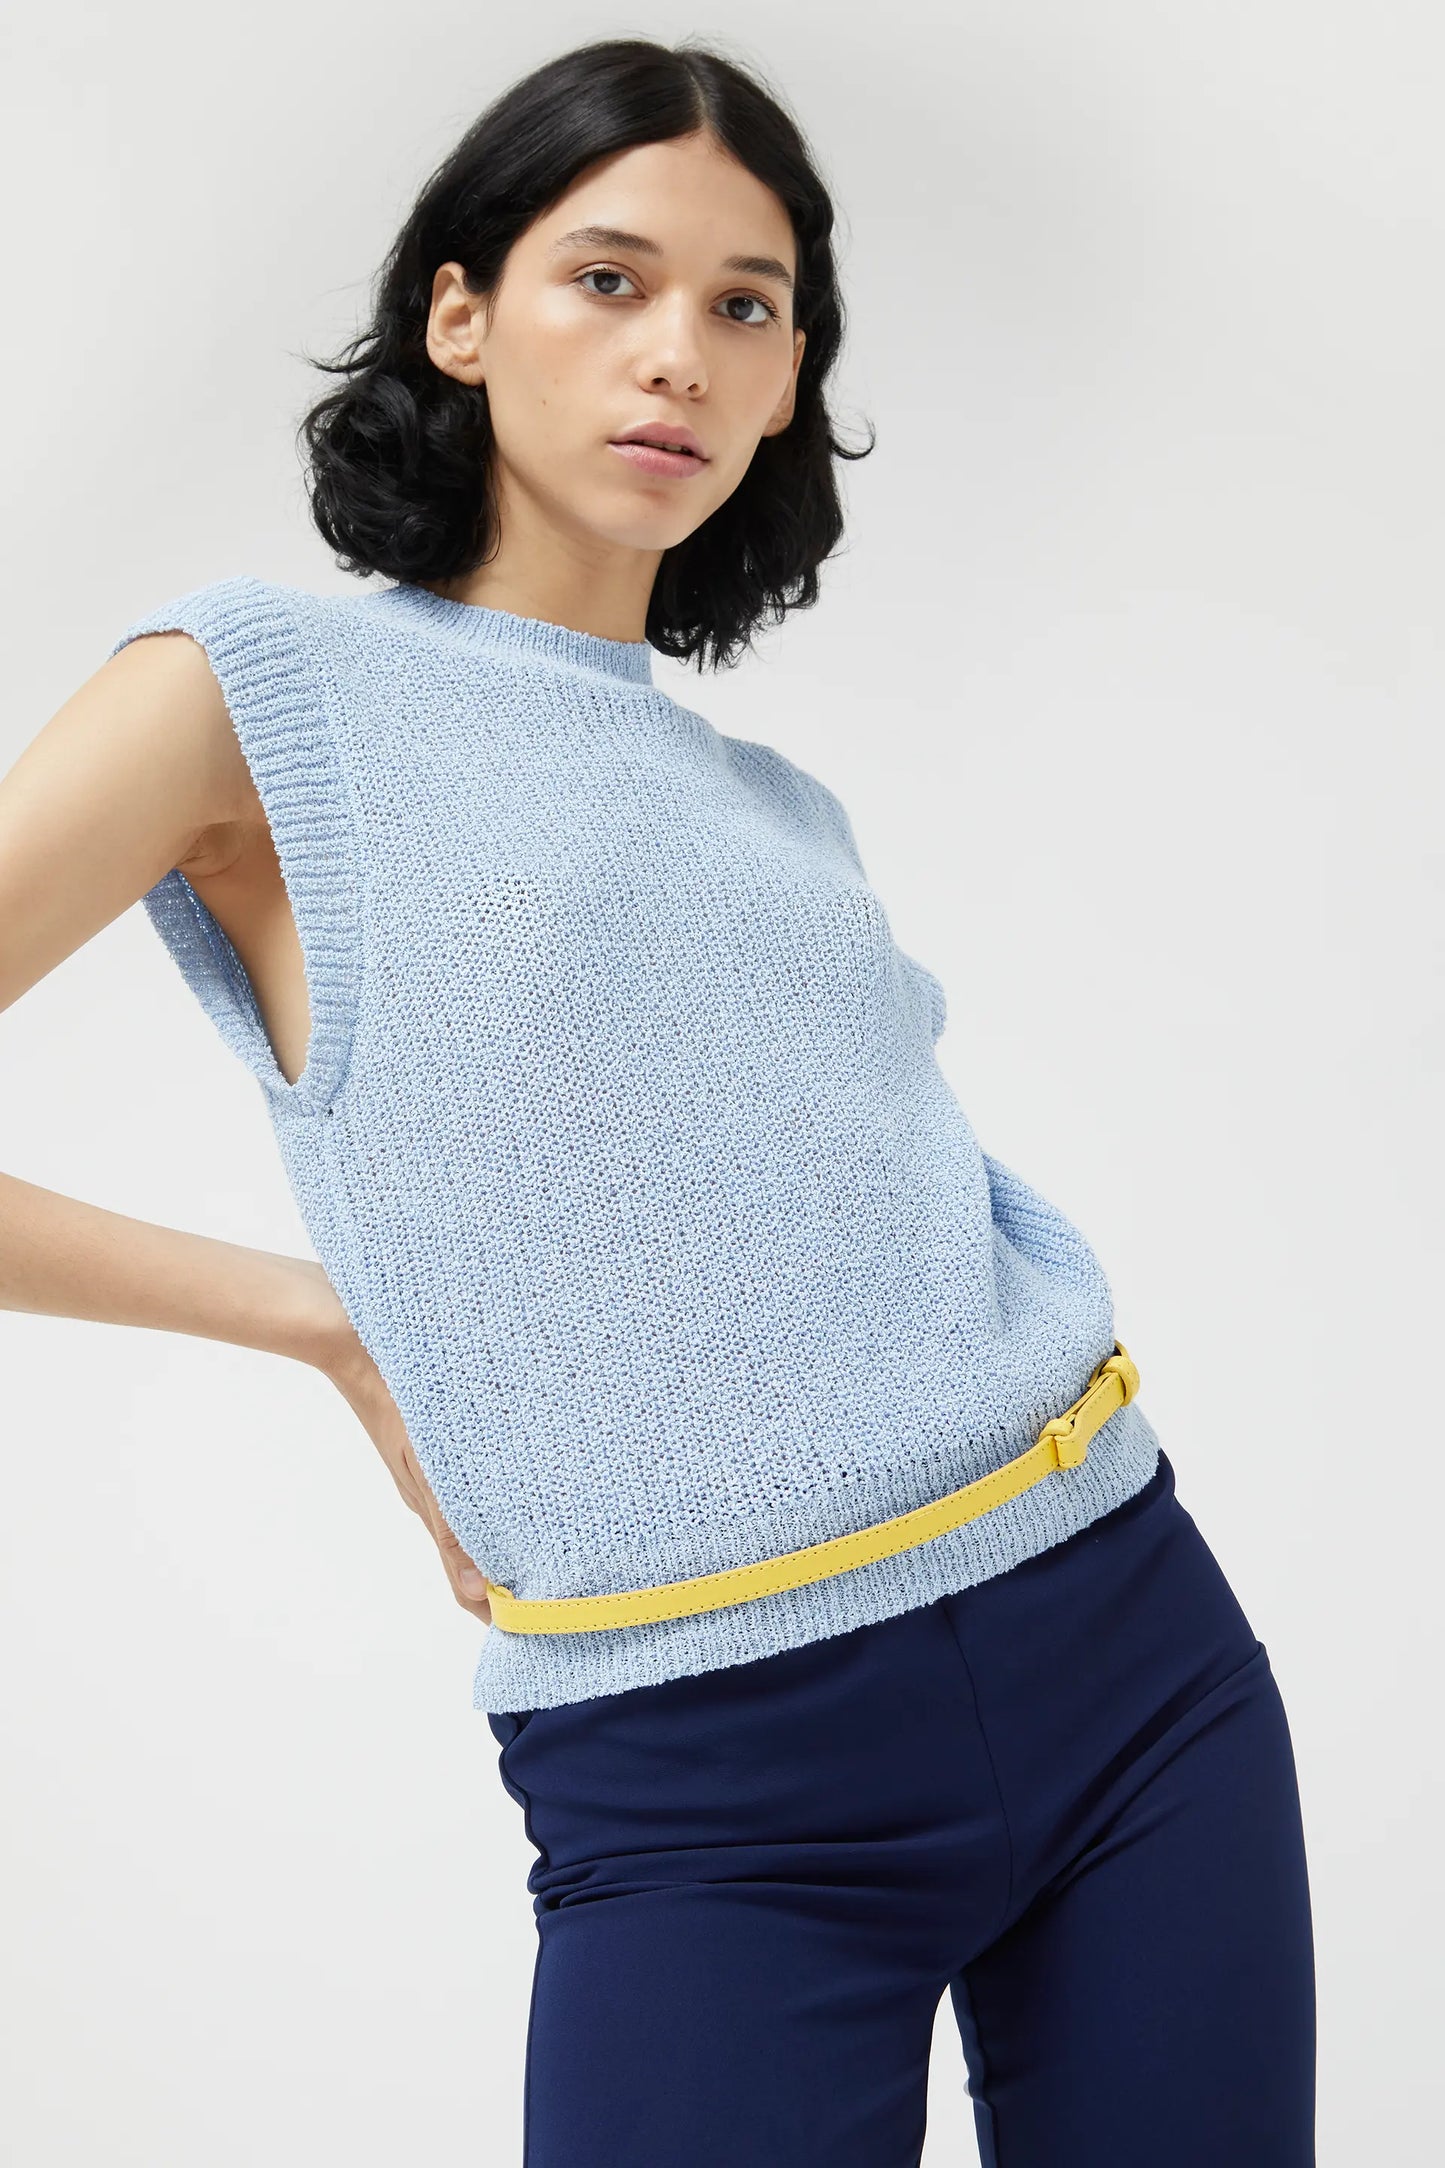 Blue sleeveless knit top